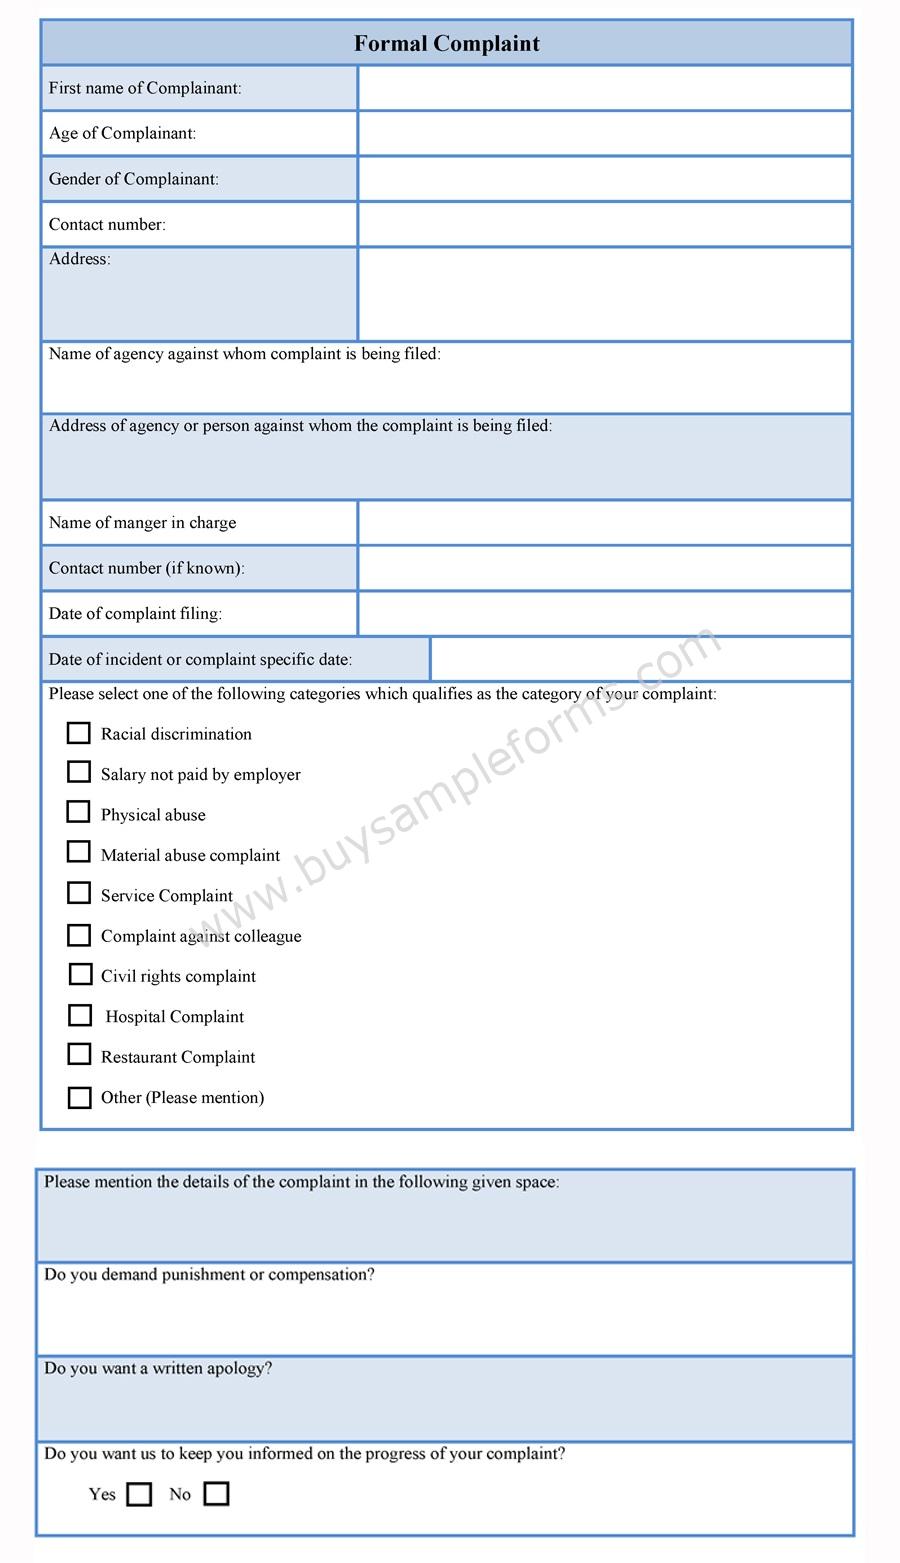 formal complaint form template